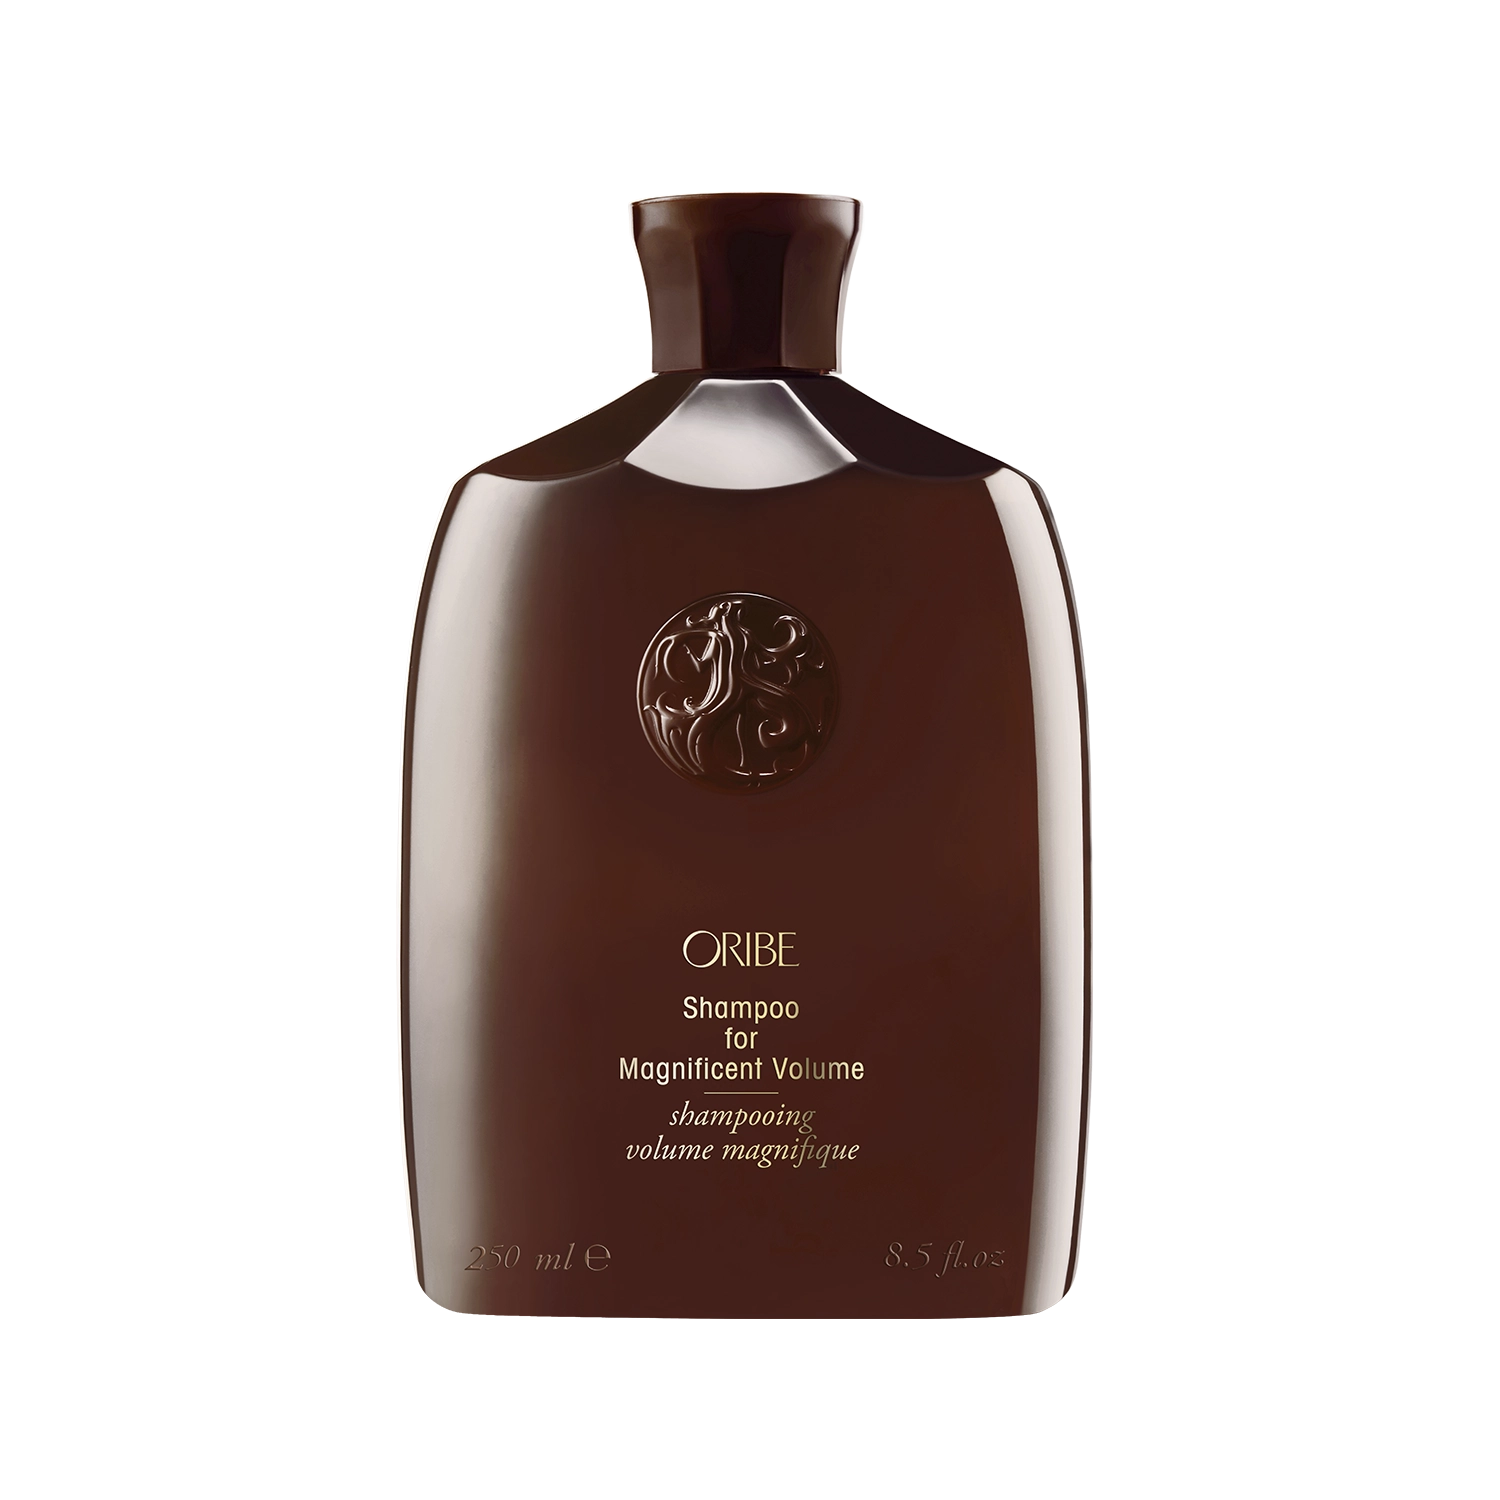 ORIBE - Magnificent volume shampoo (250ml)